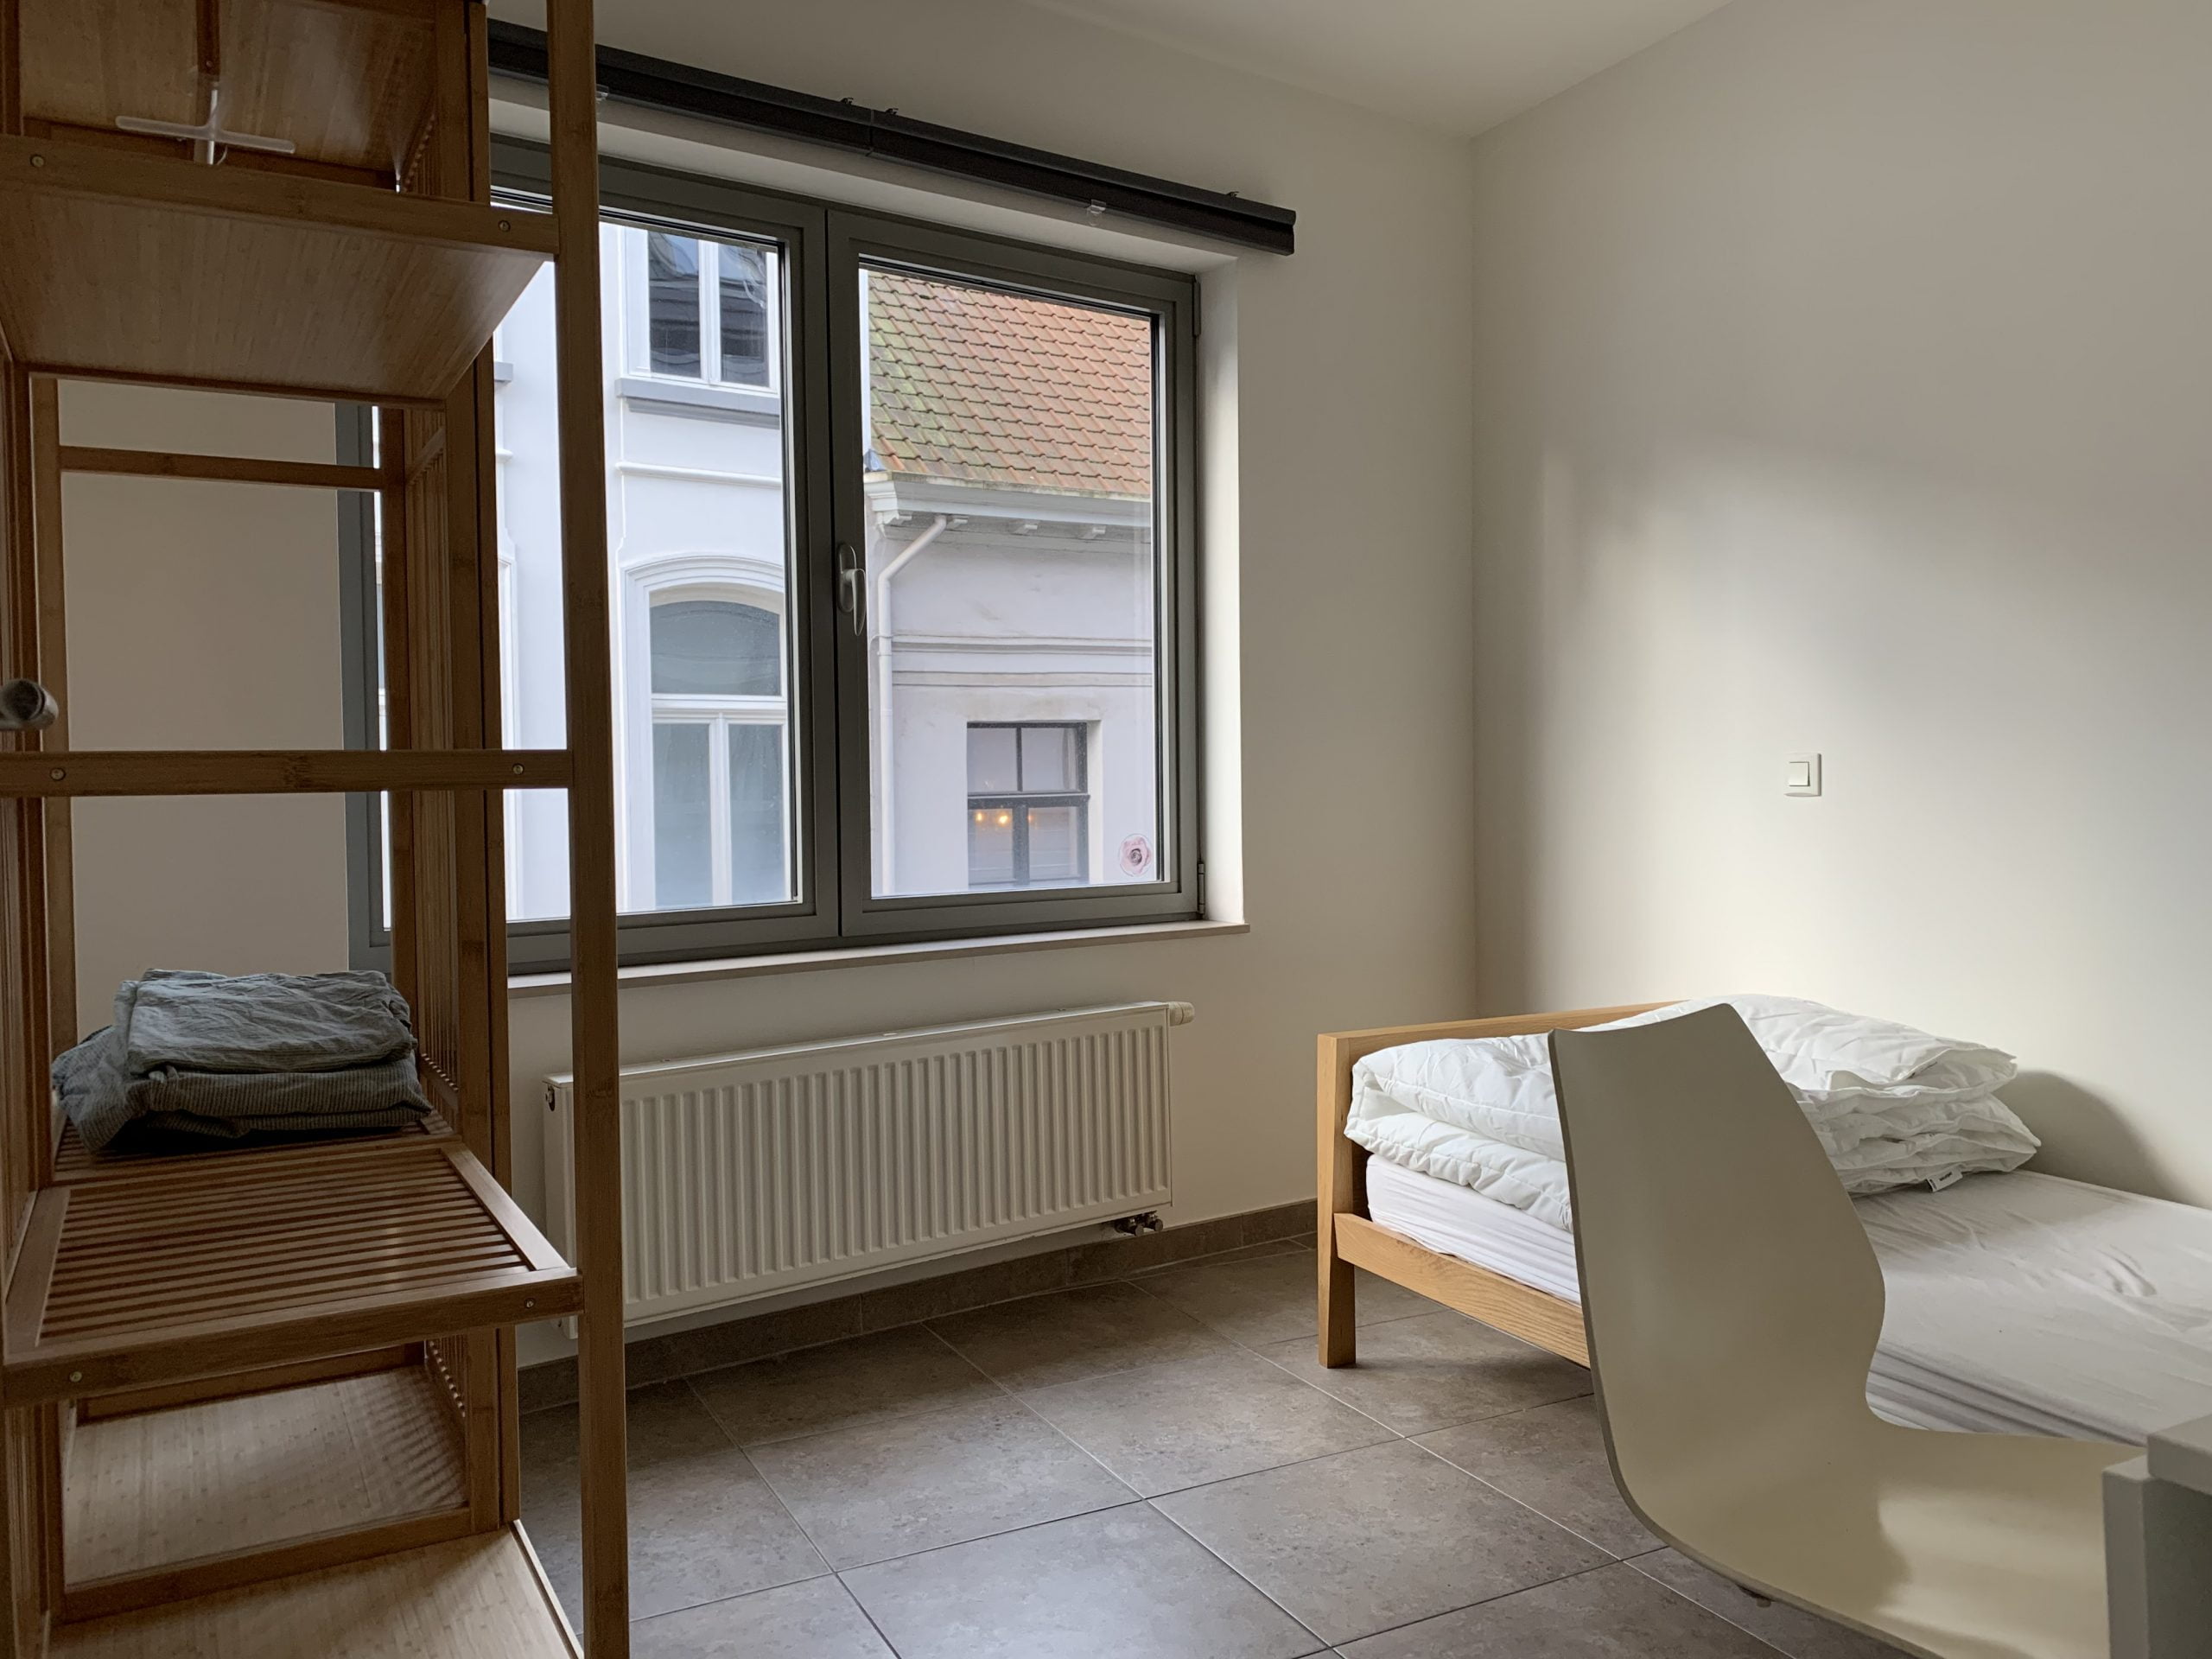 Houtbriel - Furnished expat flat in Ghent